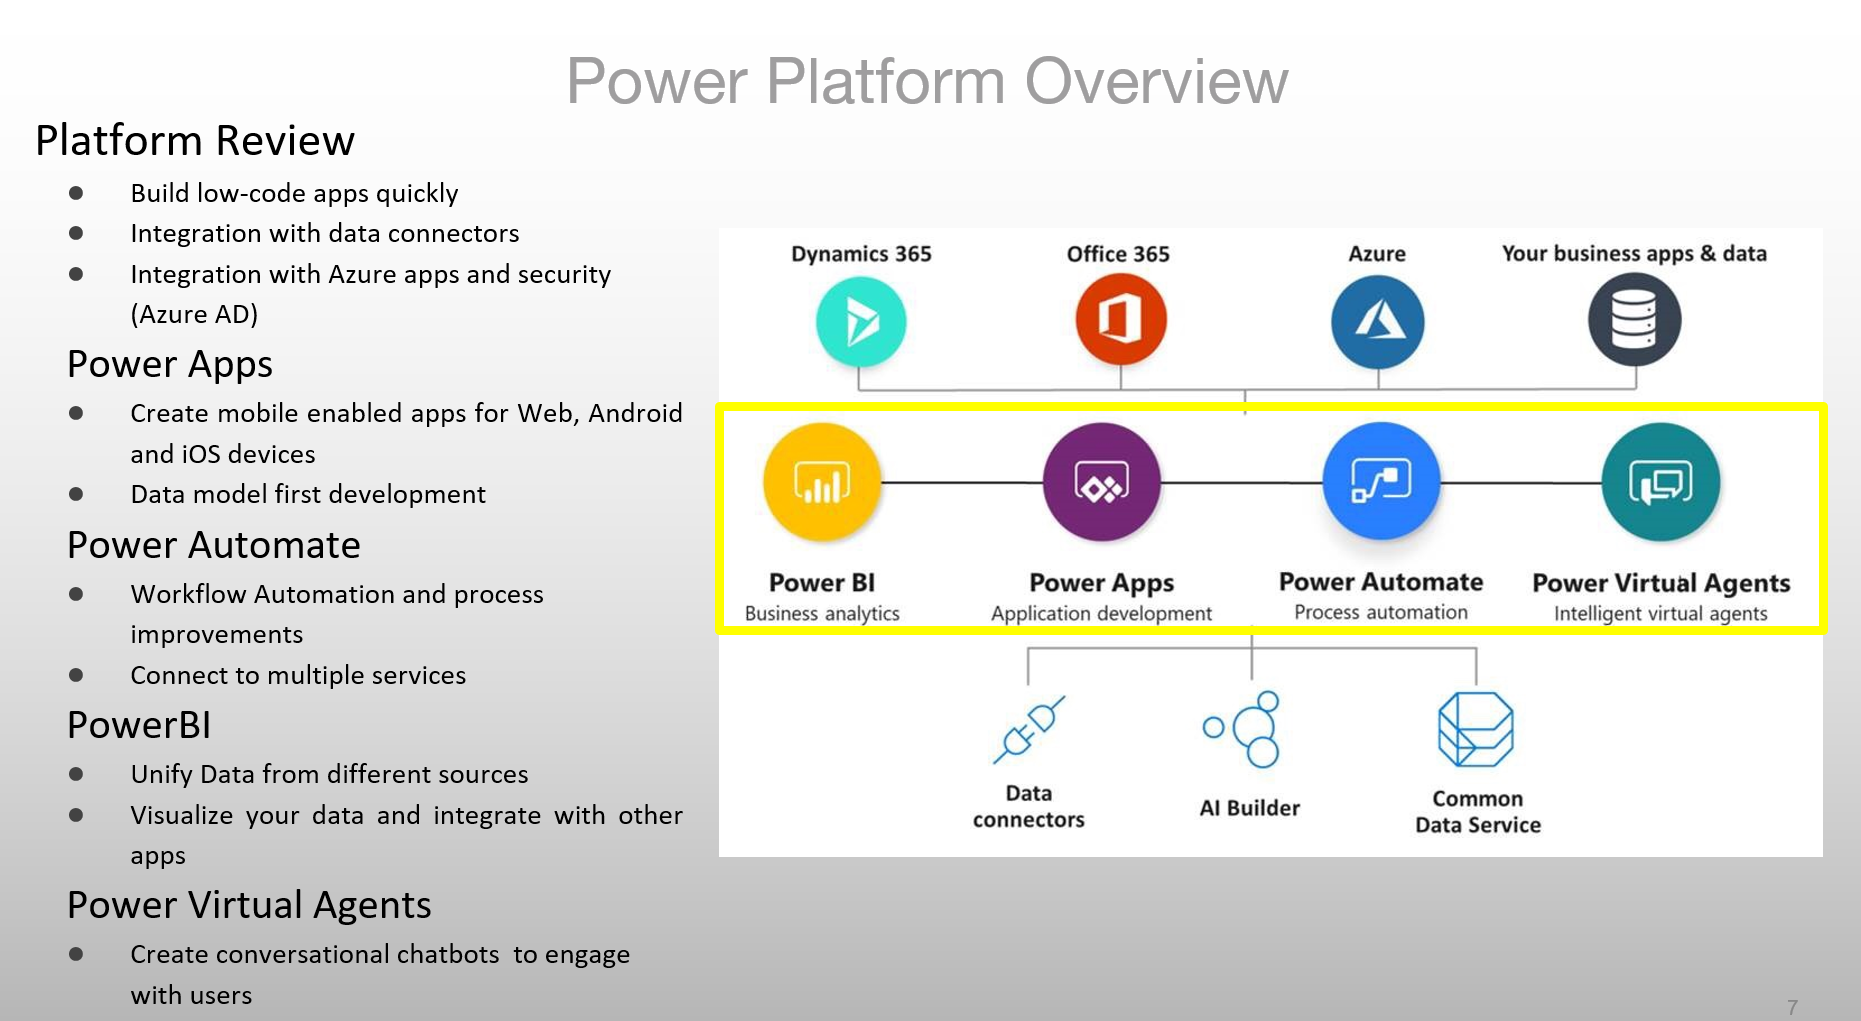 Power Platform by Oscar Garcia @ozkary